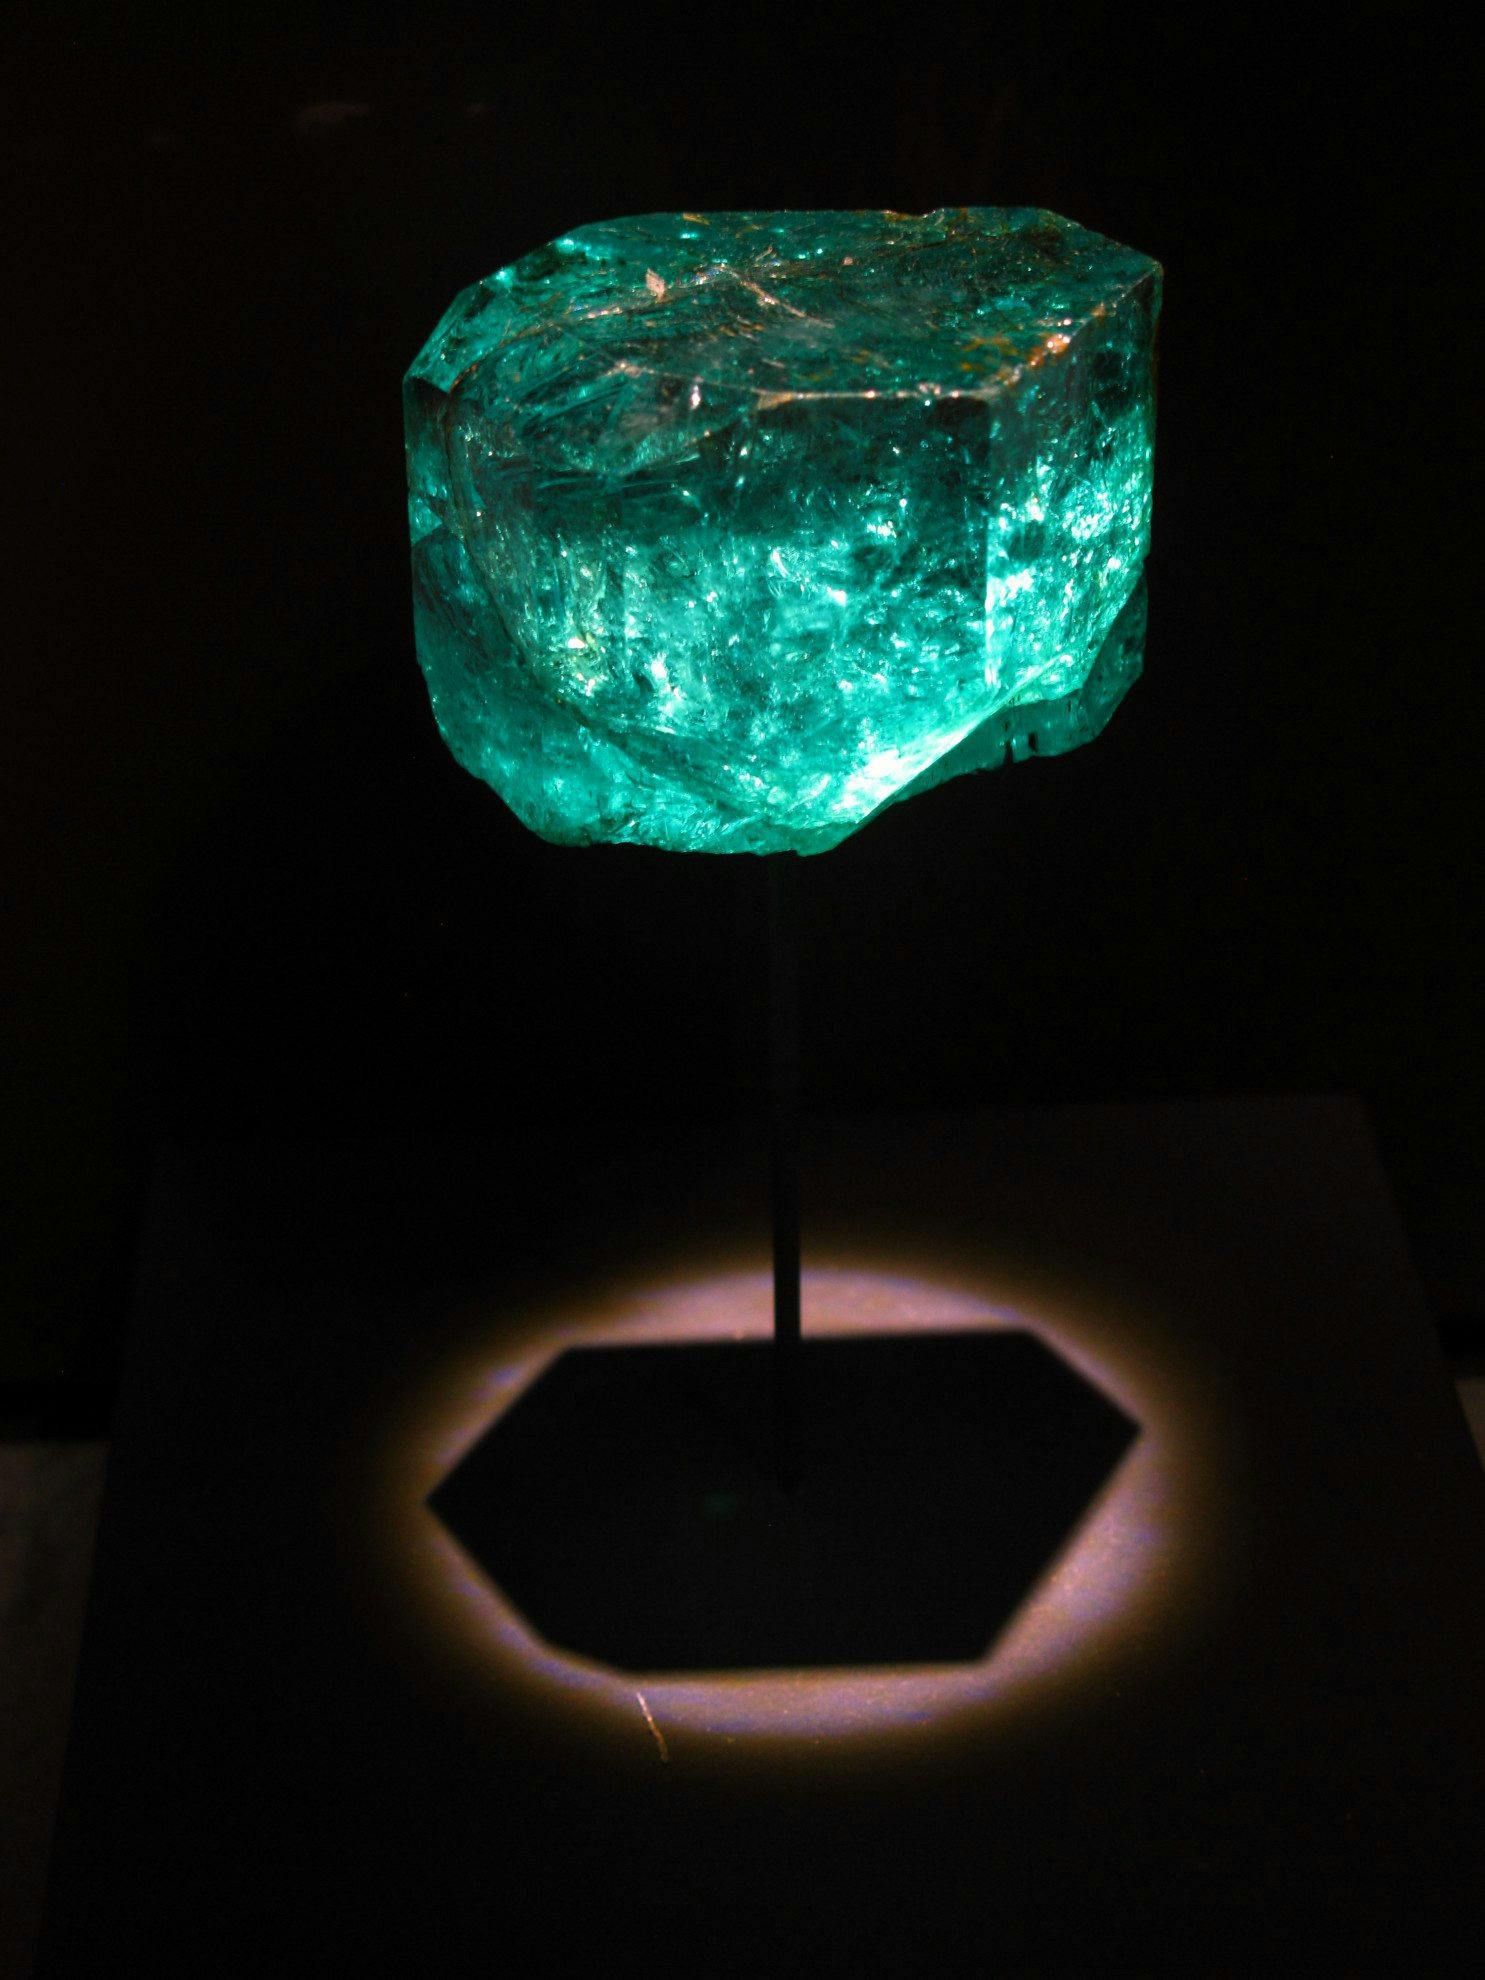 The Gachalá emerald